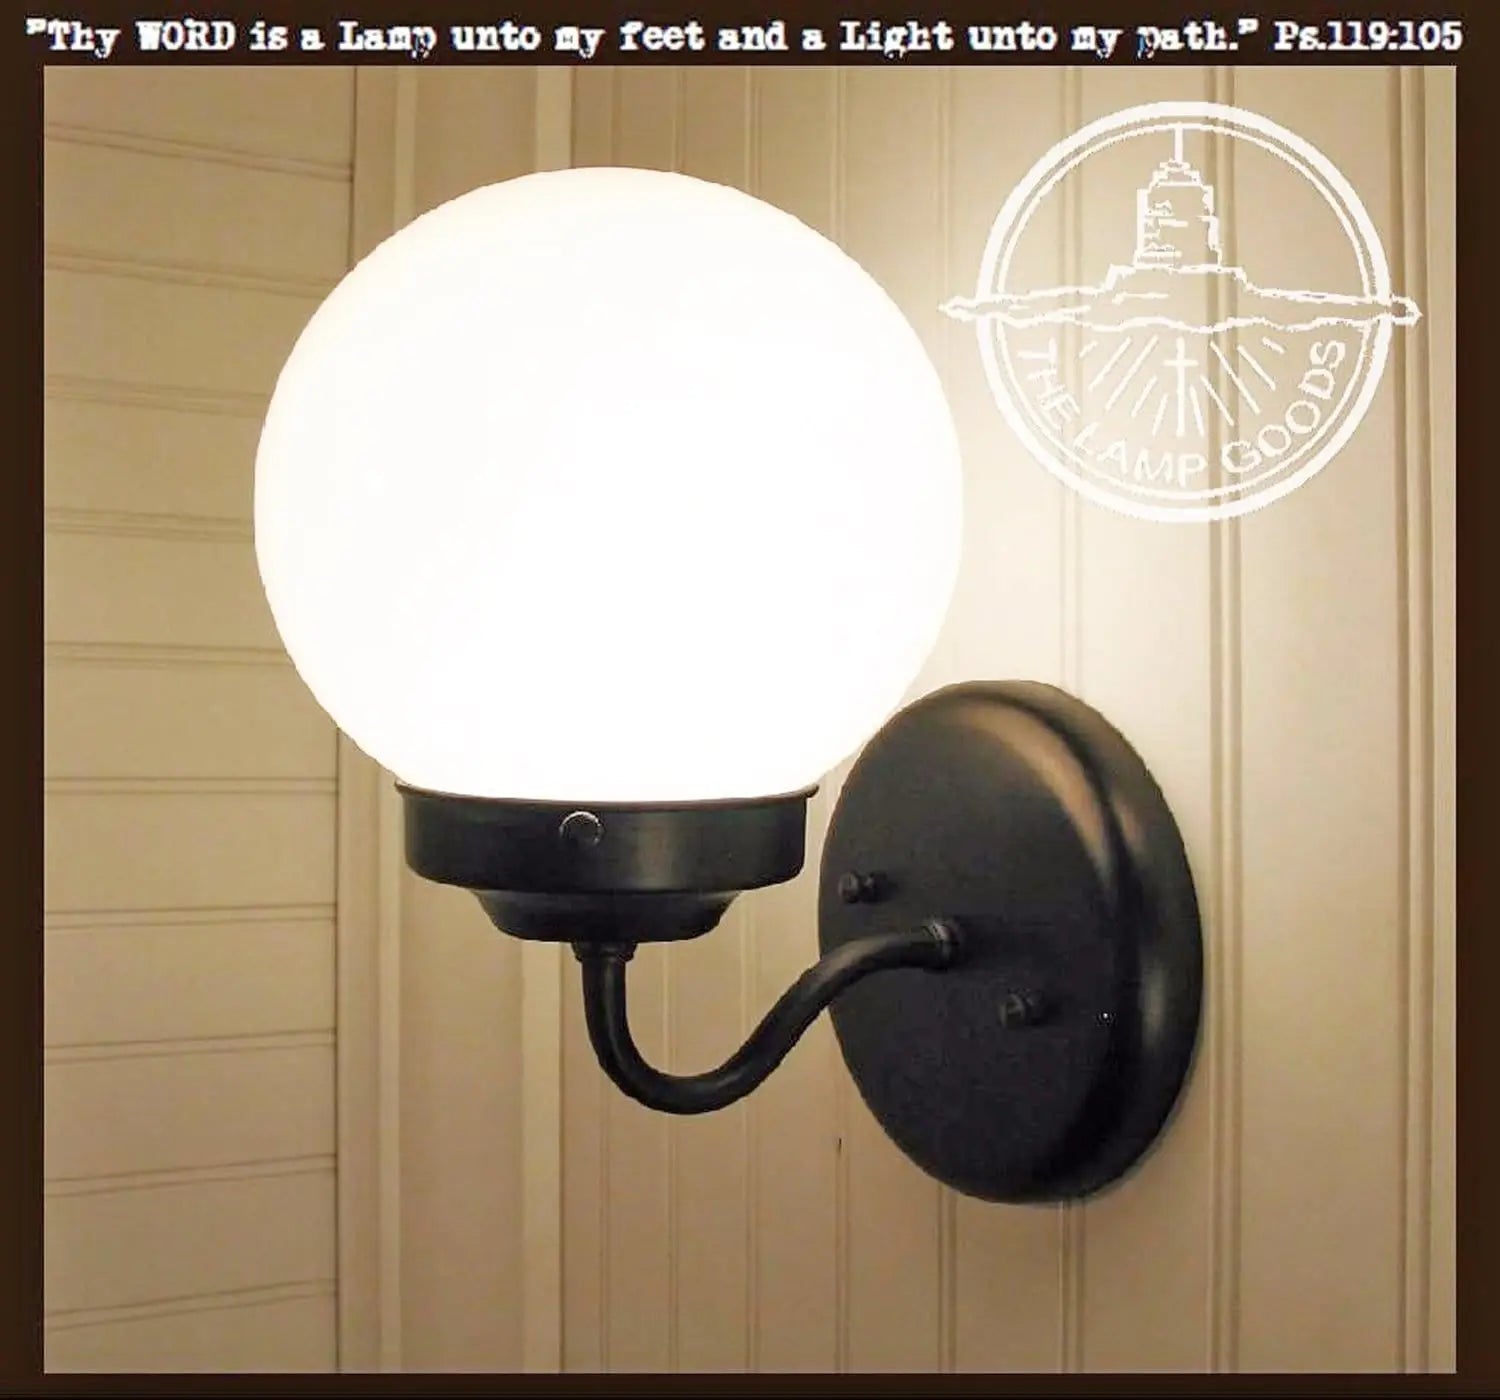 Port. Globe Wall Sconce Light Fixture - The Lamp Goods